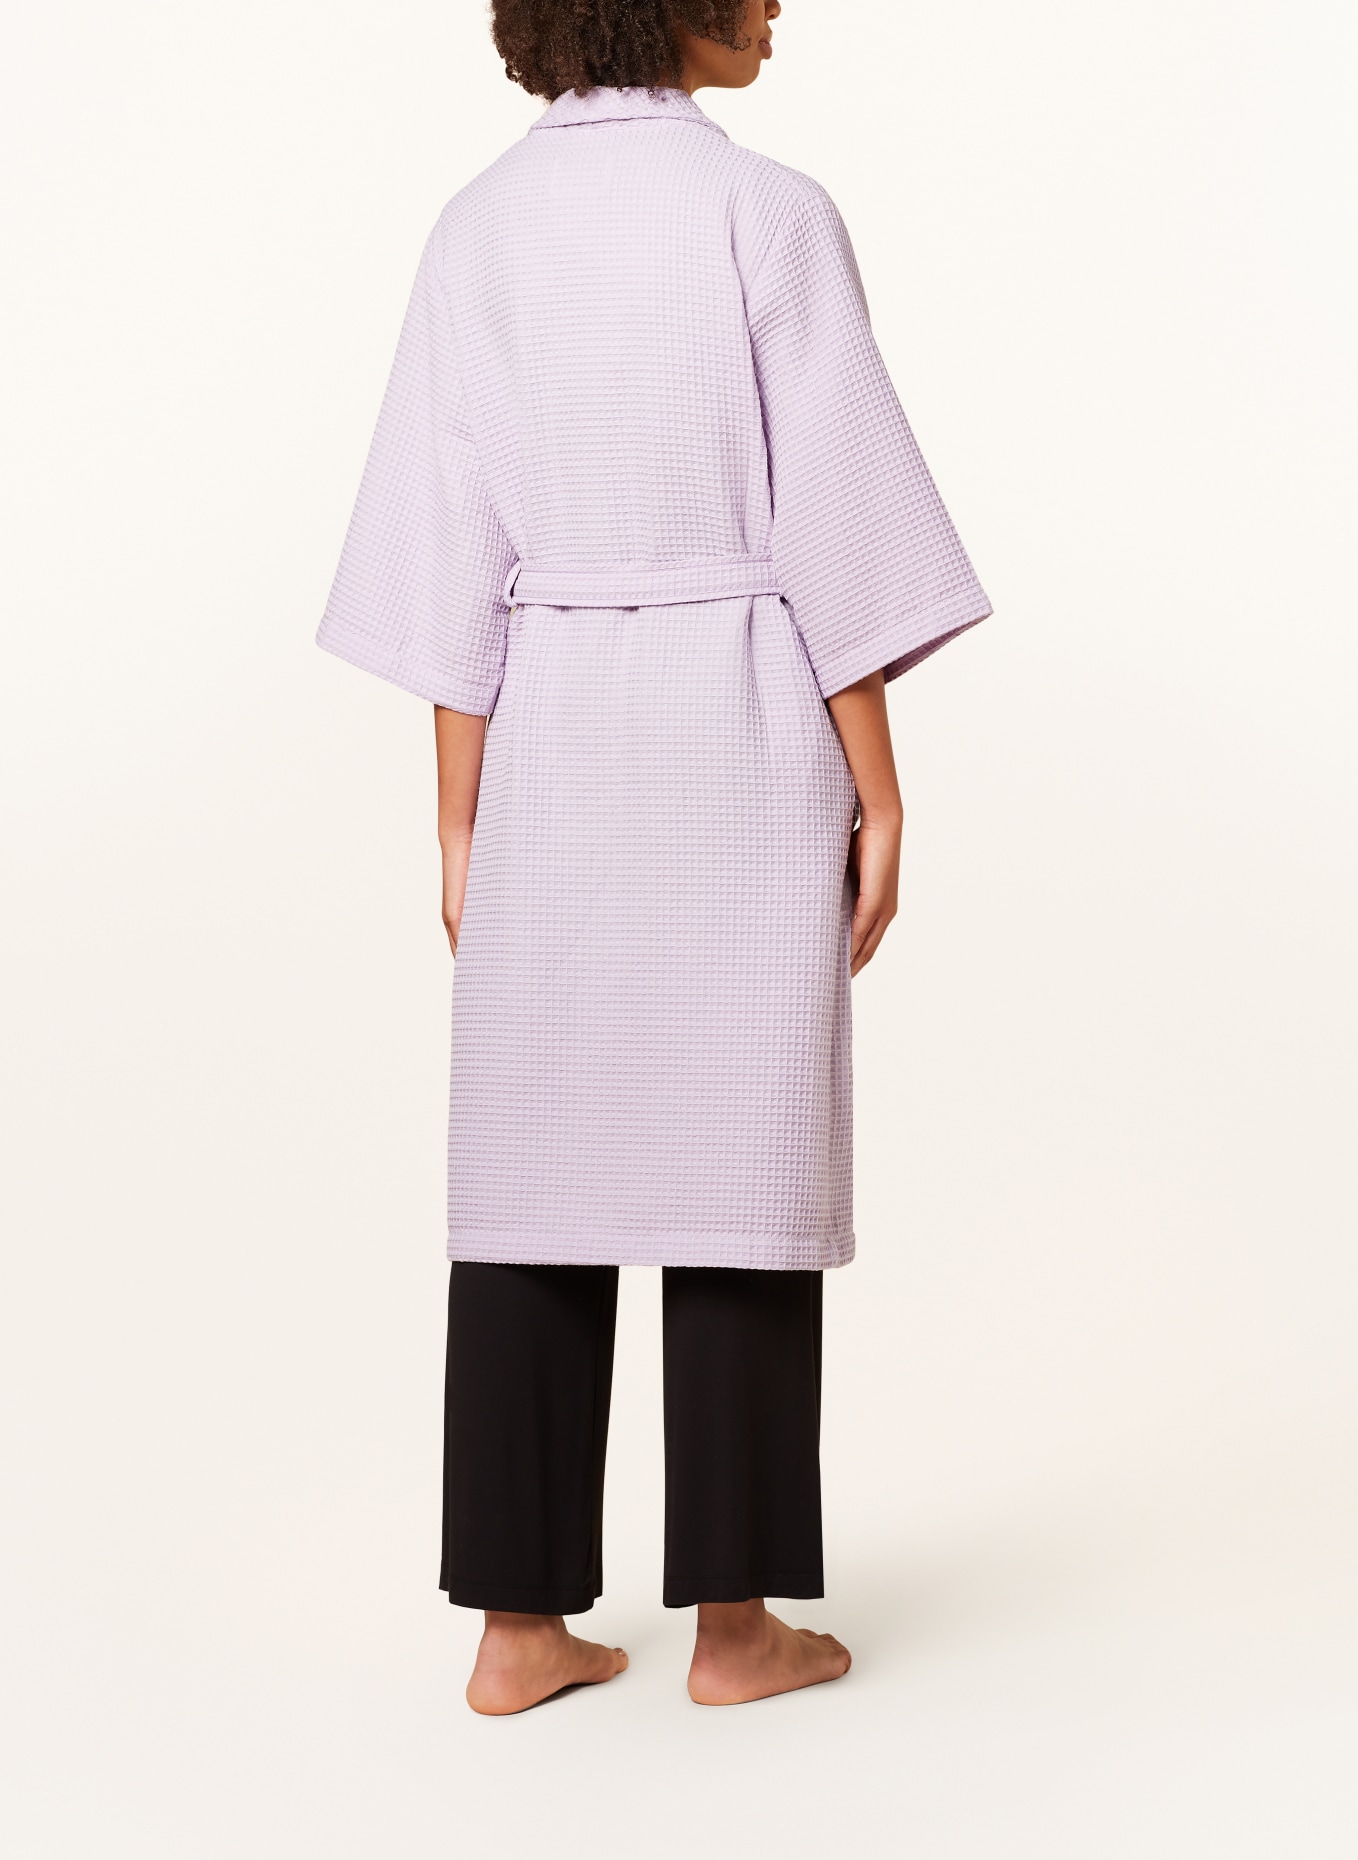 Marc O'Polo Women’s bathrobe, Color: LIGHT PURPLE (Image 3)